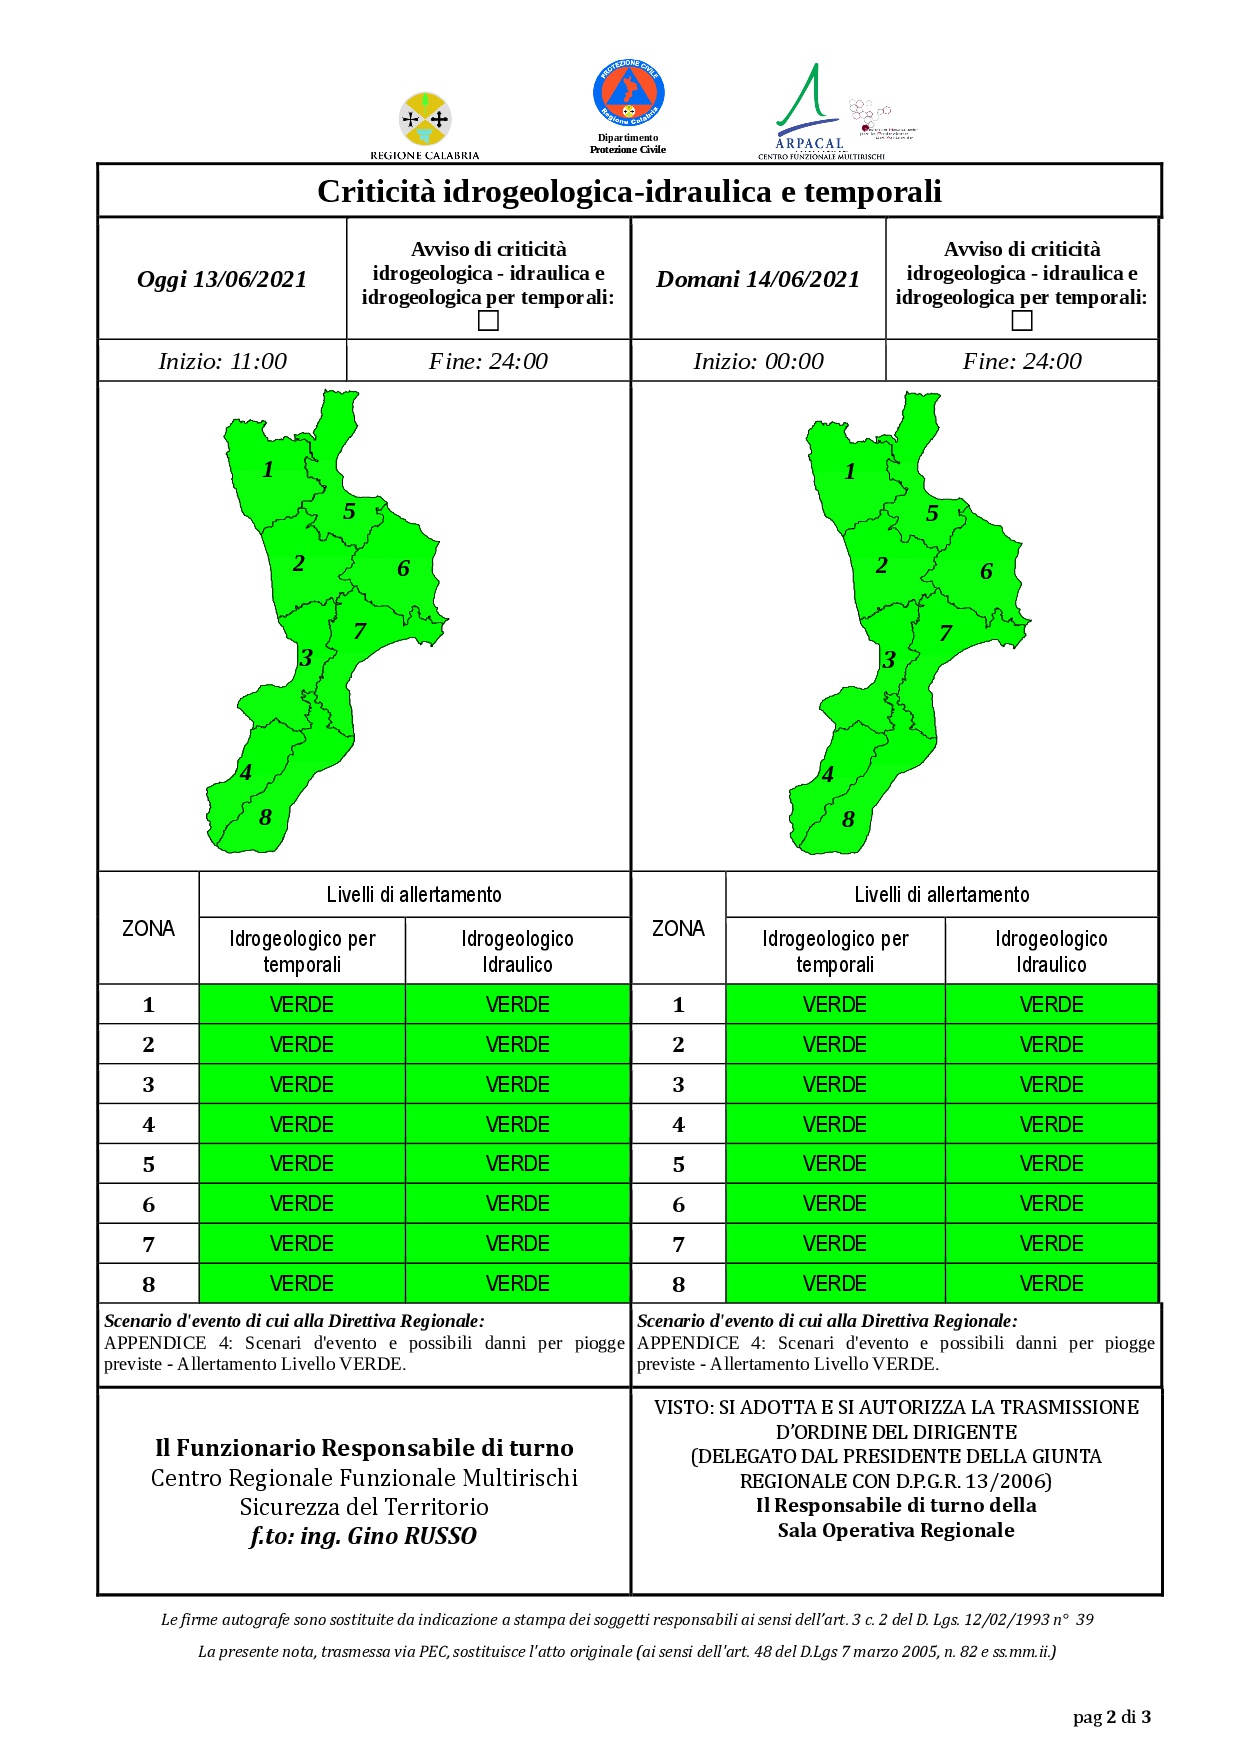 Criticità idrogeologica-idraulica e temporali in Calabria 13-06-2021